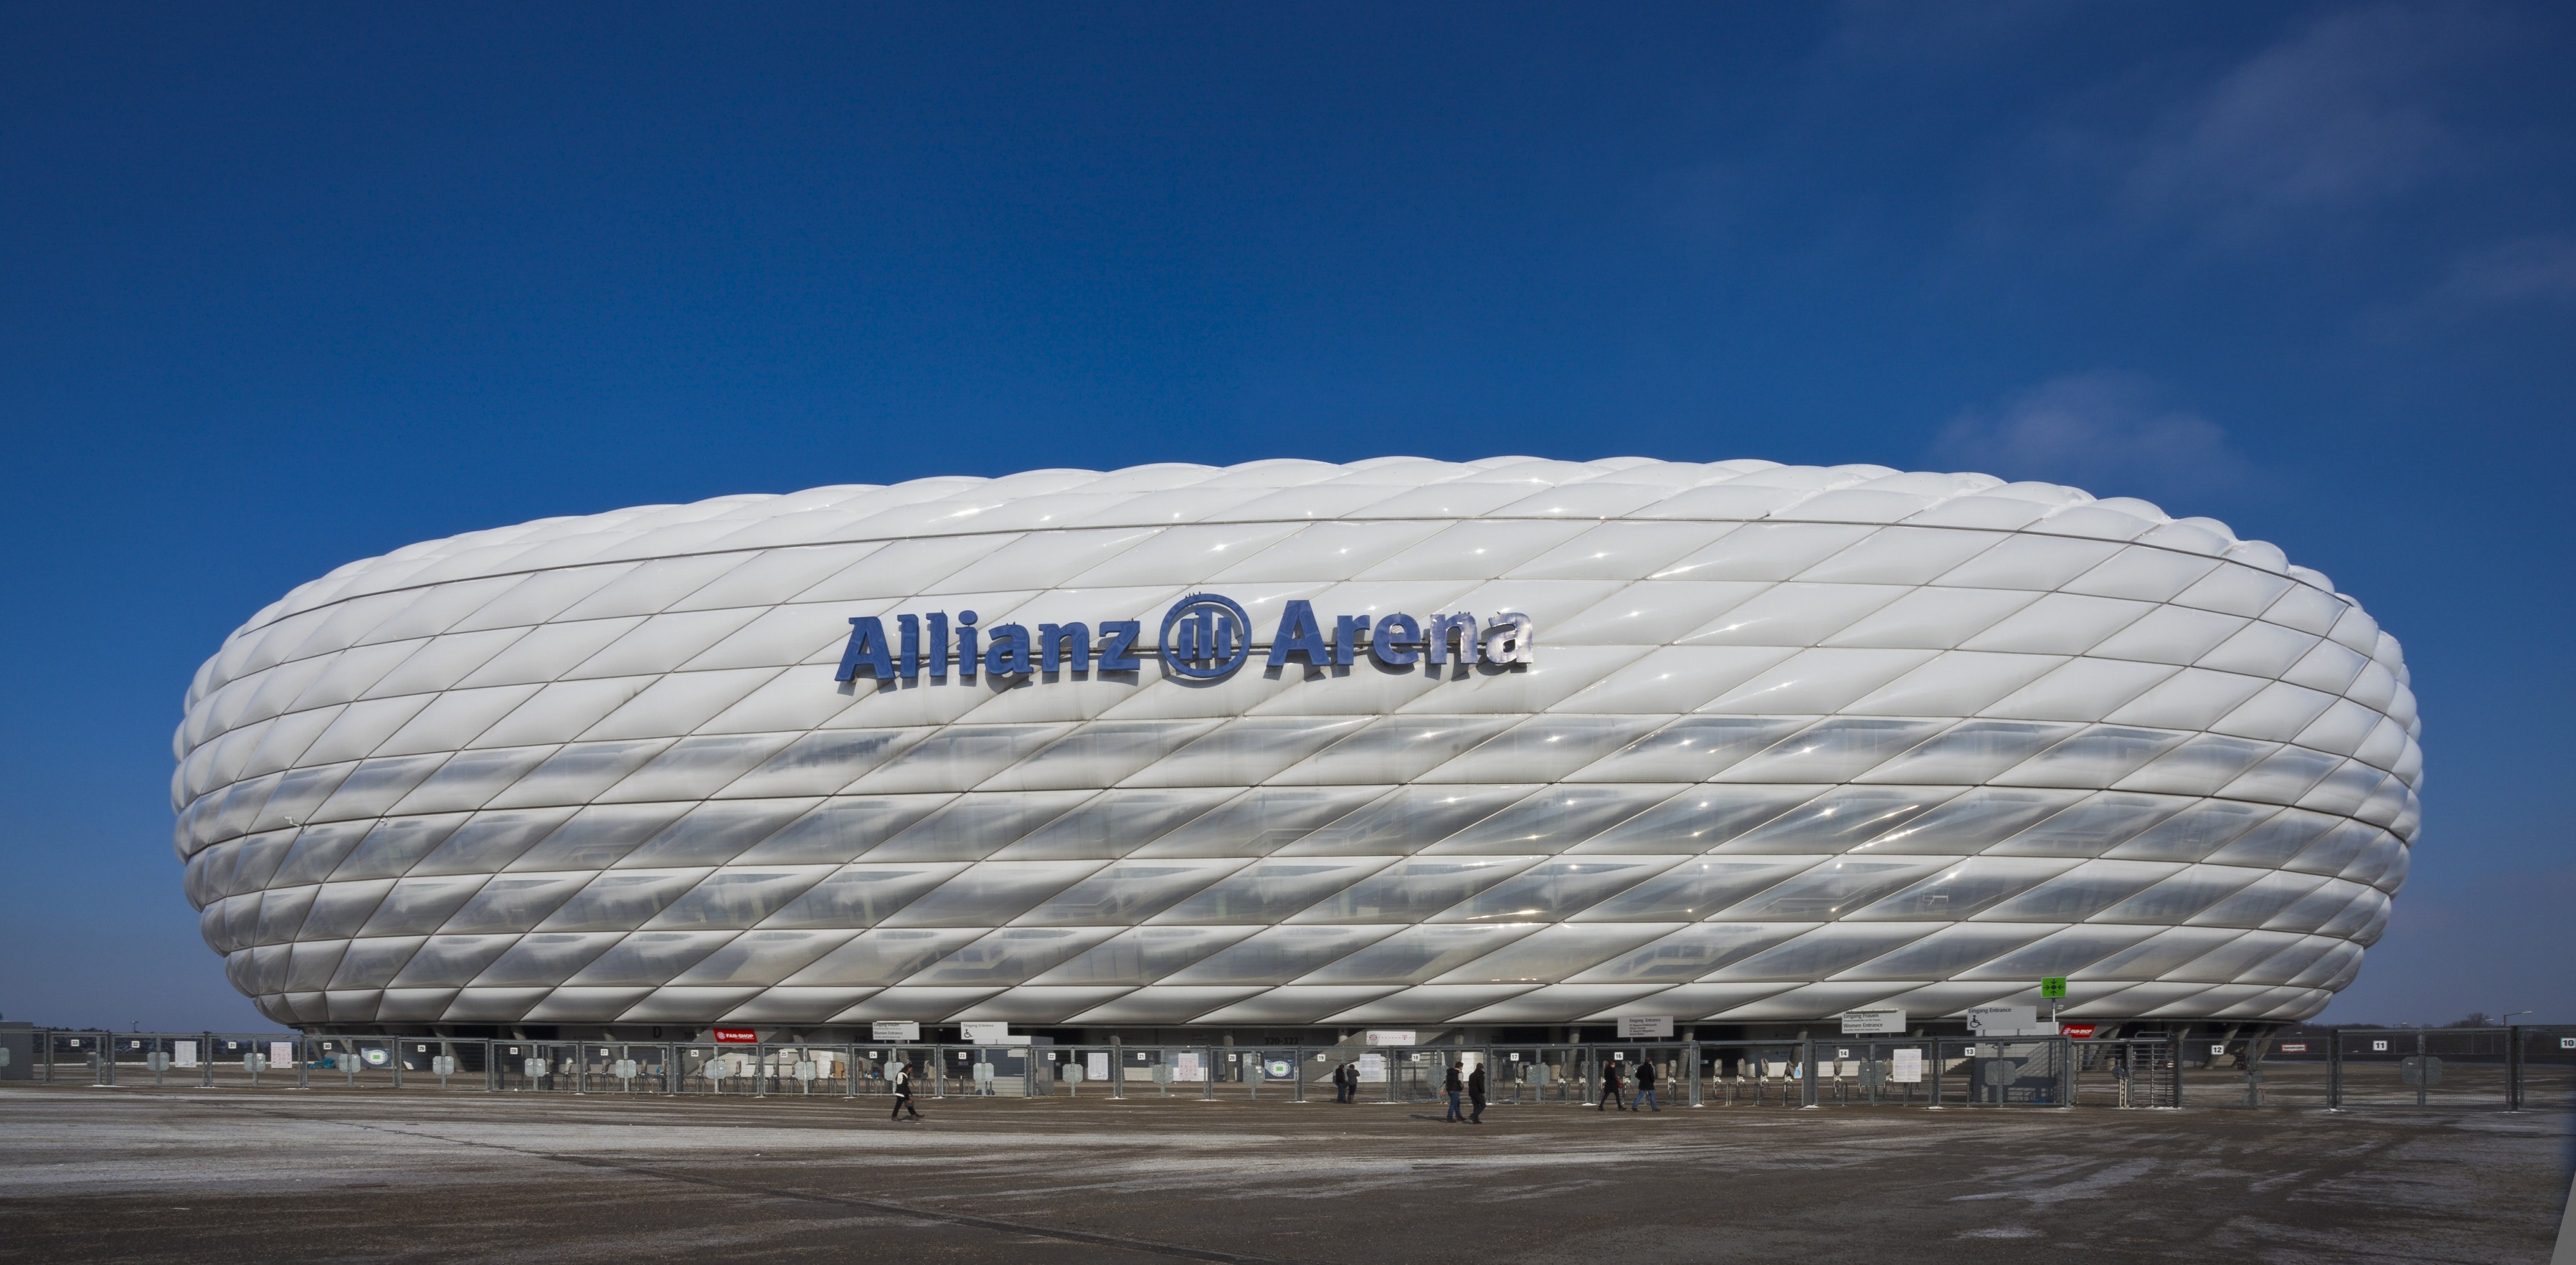 Allianz Arena, Múnich, Alemania, 2013-02-11, DD 04